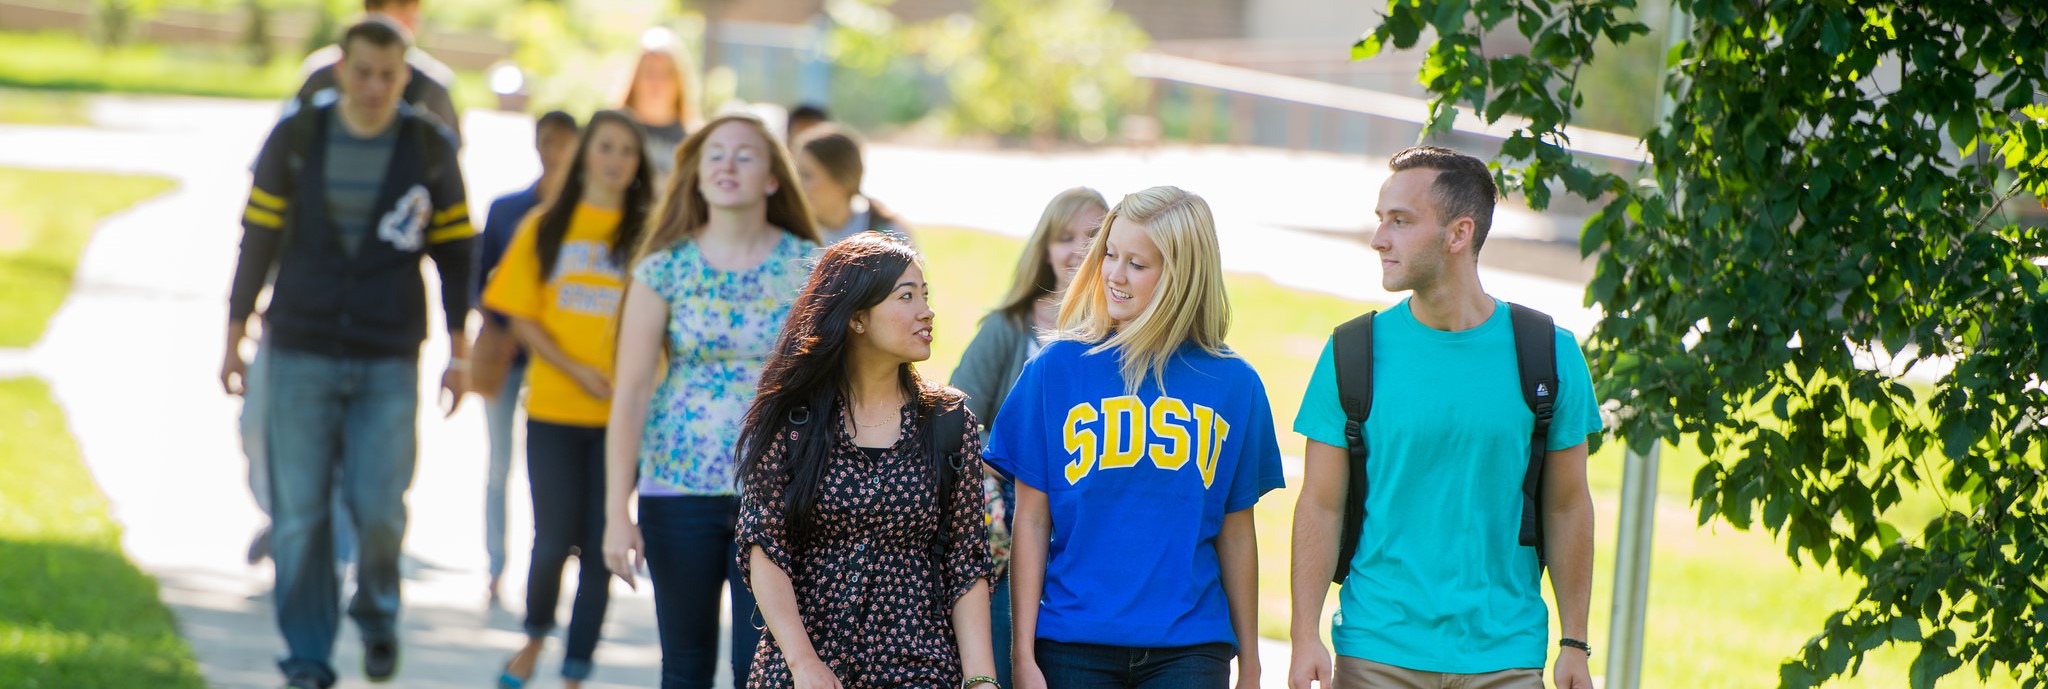 SDSU students on campus.